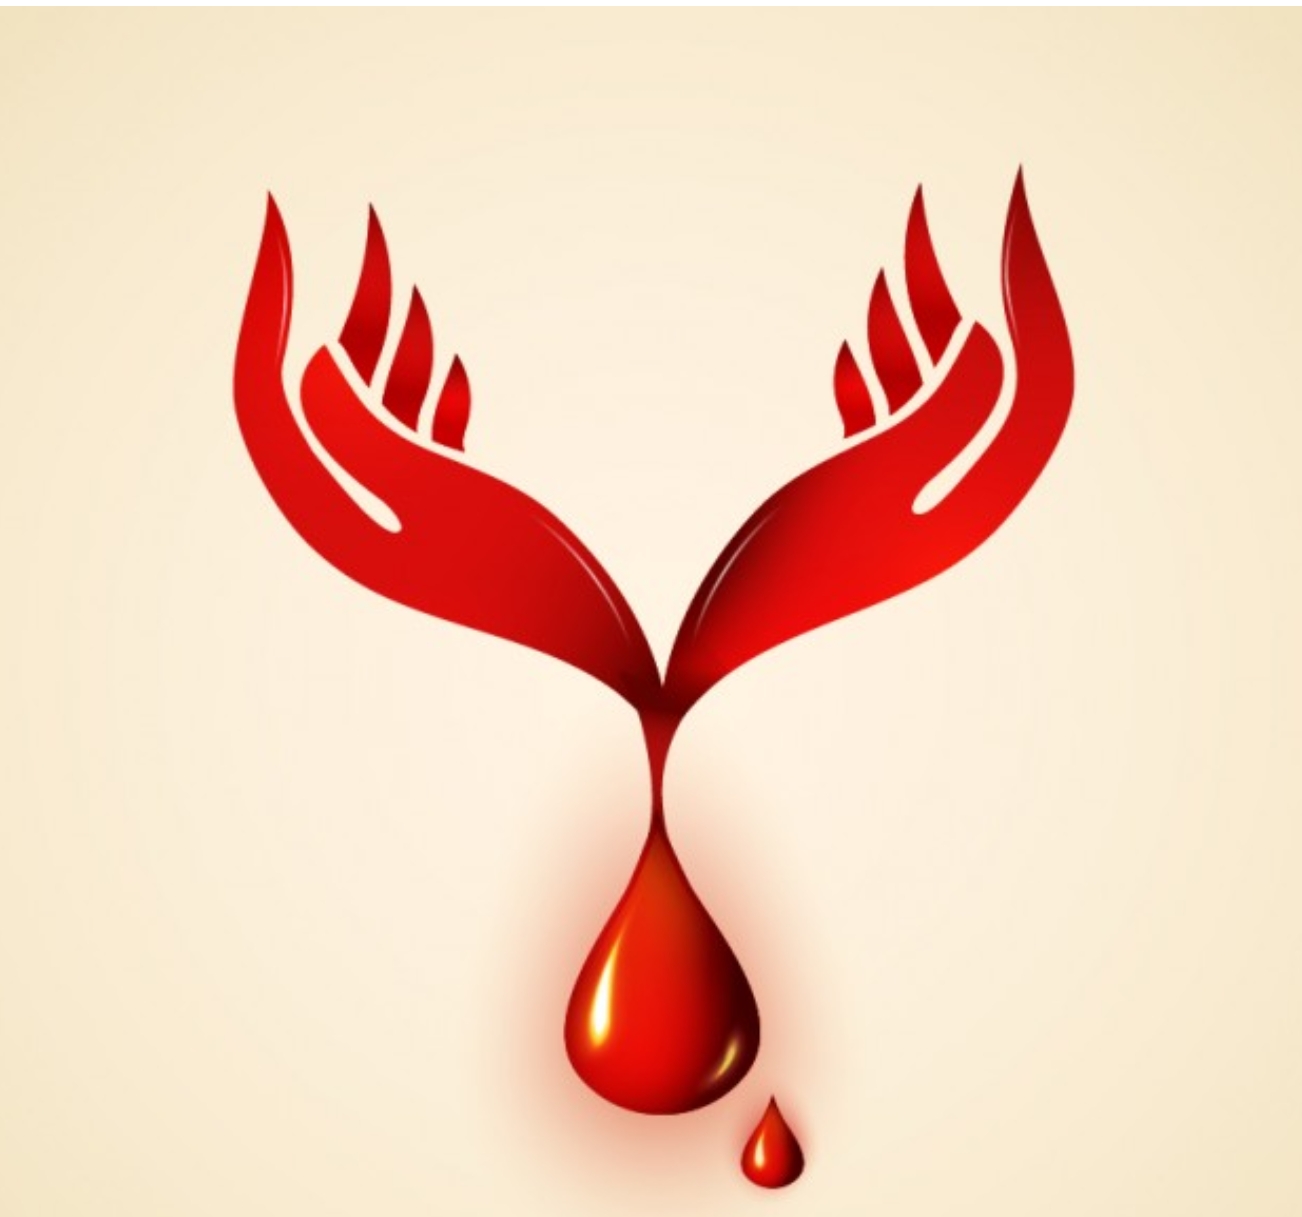 Embliyma donorstva. Капля крови логотип. Символ донорства крови. Донорство крови логотип.